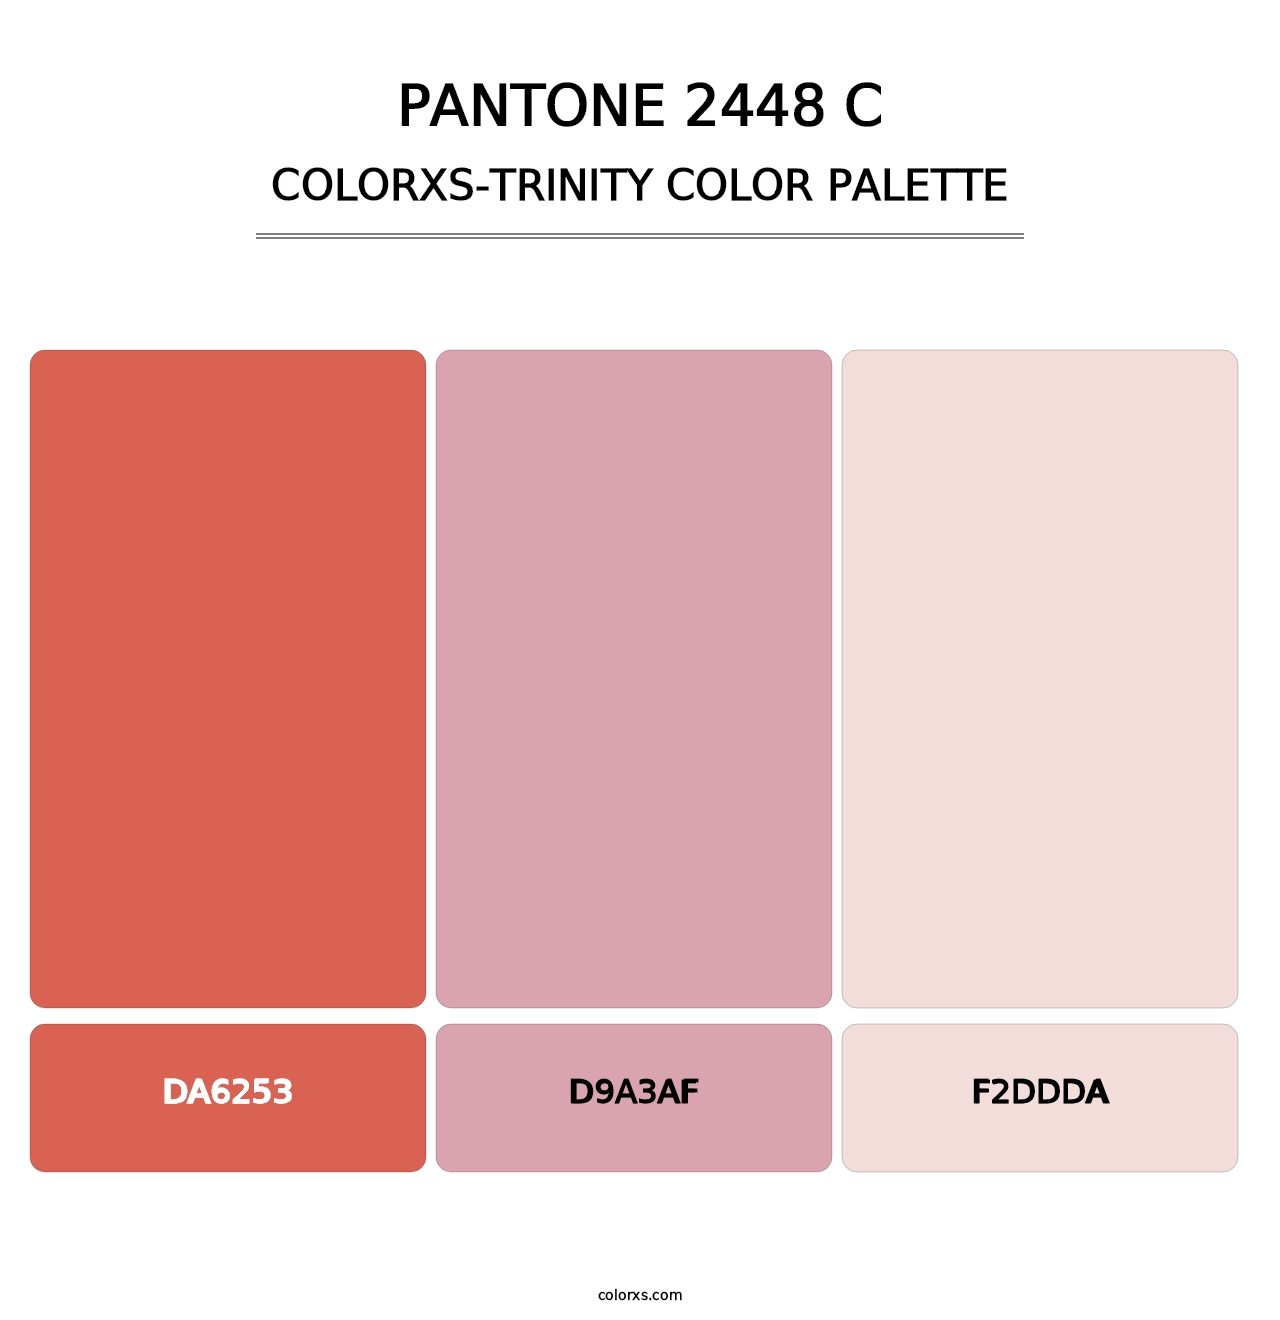 PANTONE 2448 C - Colorxs Trinity Palette